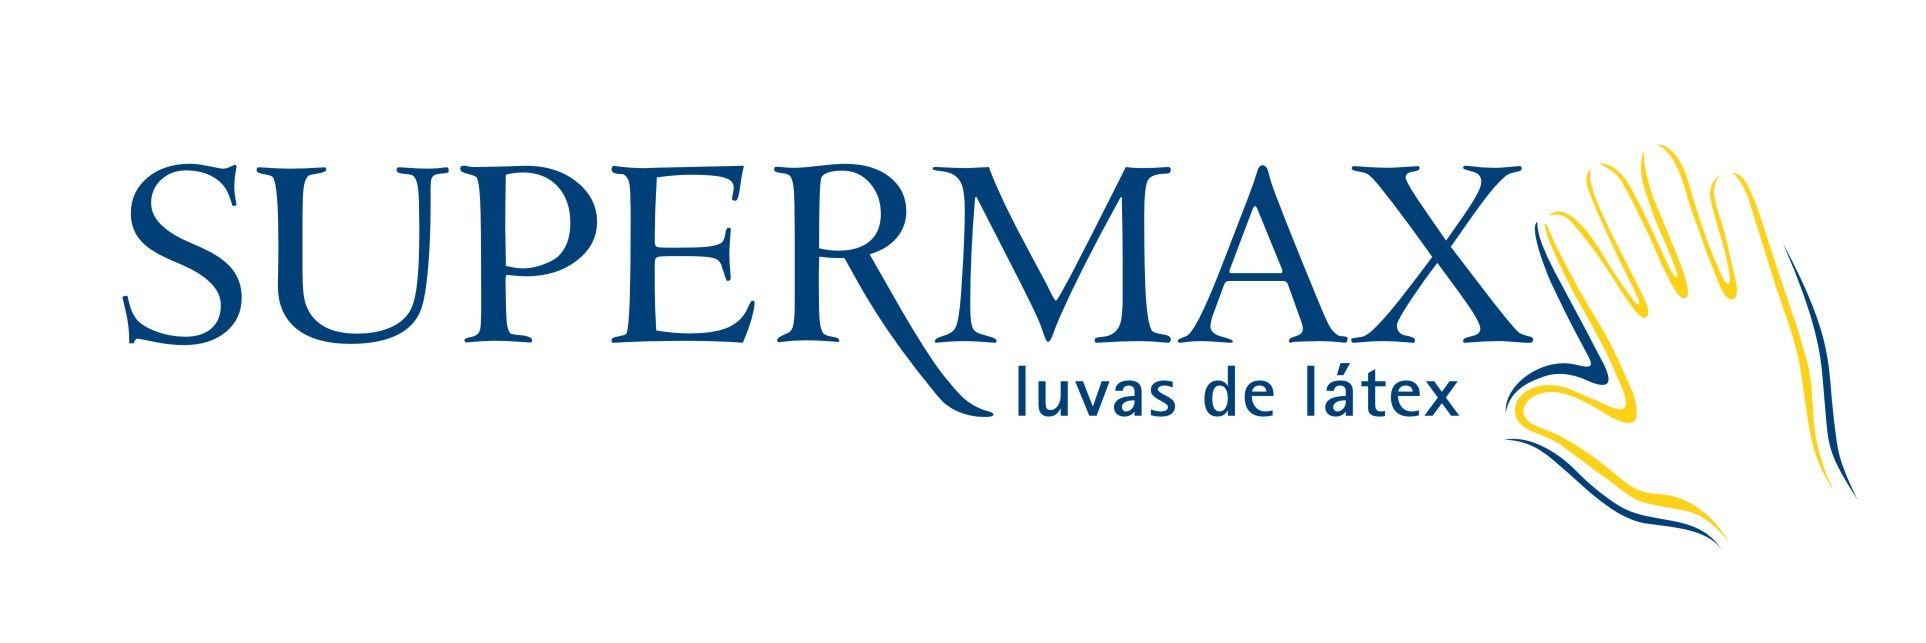 Supermax Logo - Magazine Médica